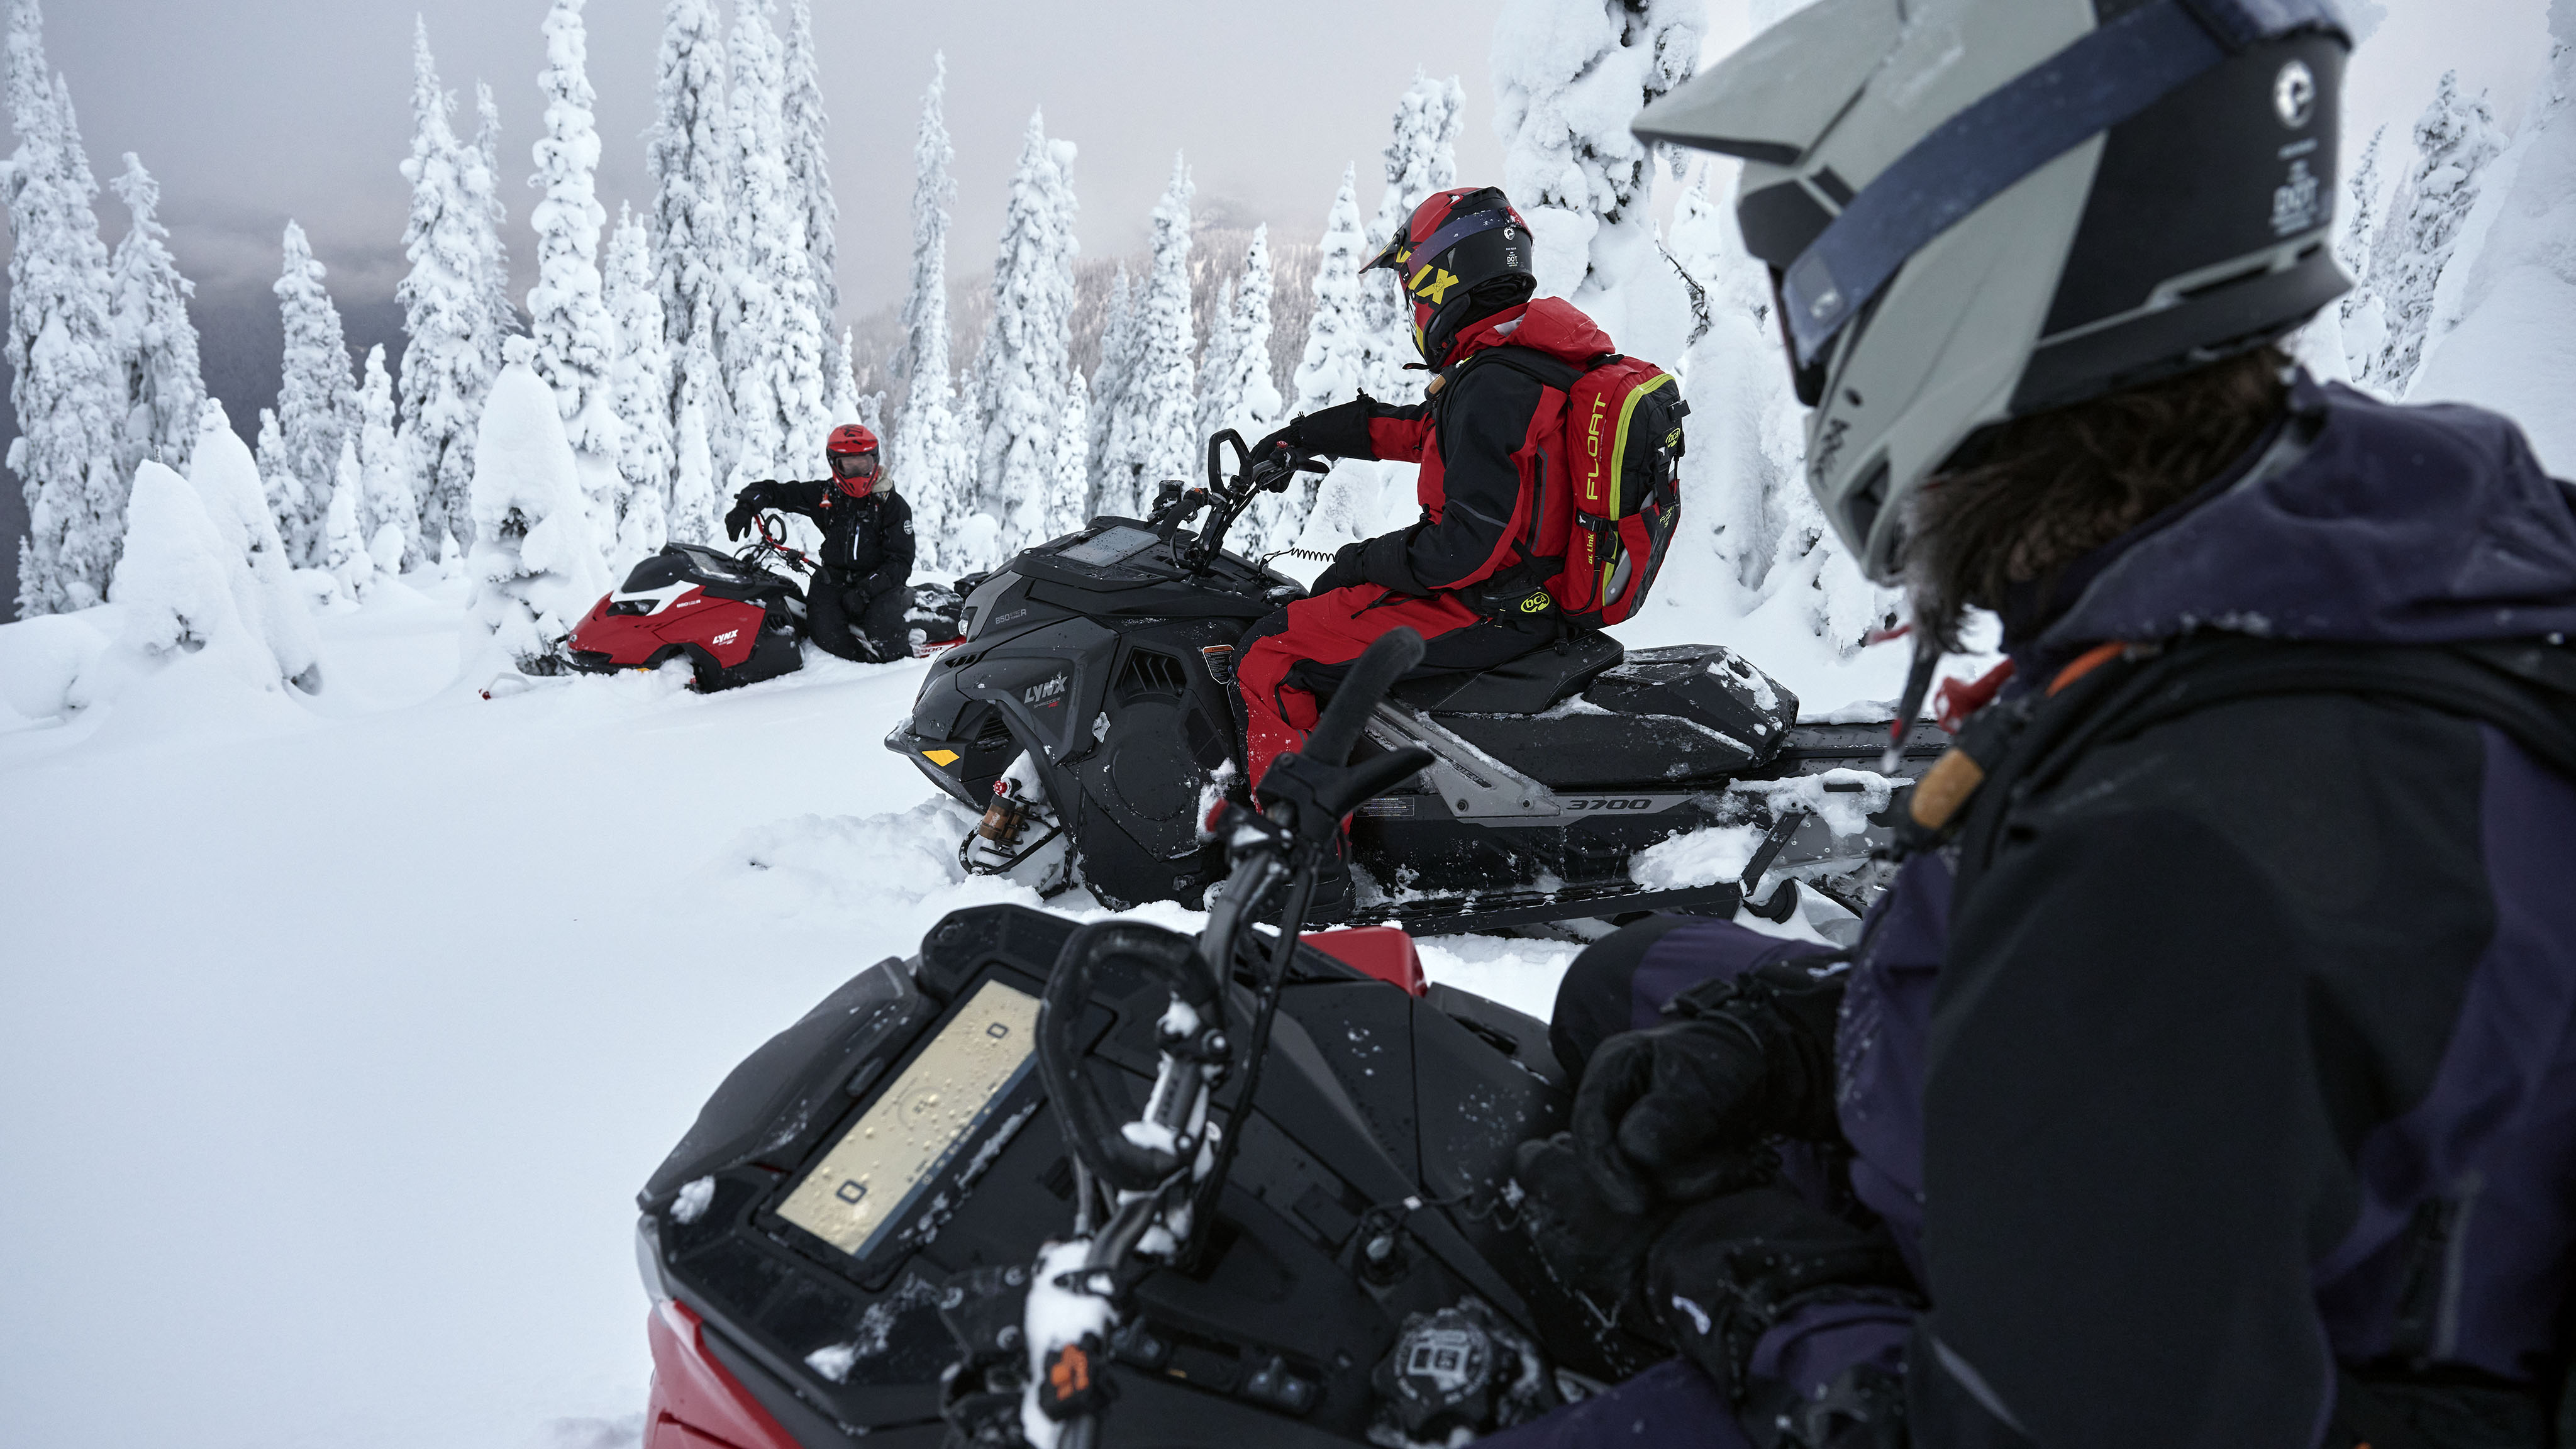 Lynx riders preparing to ride on mountains